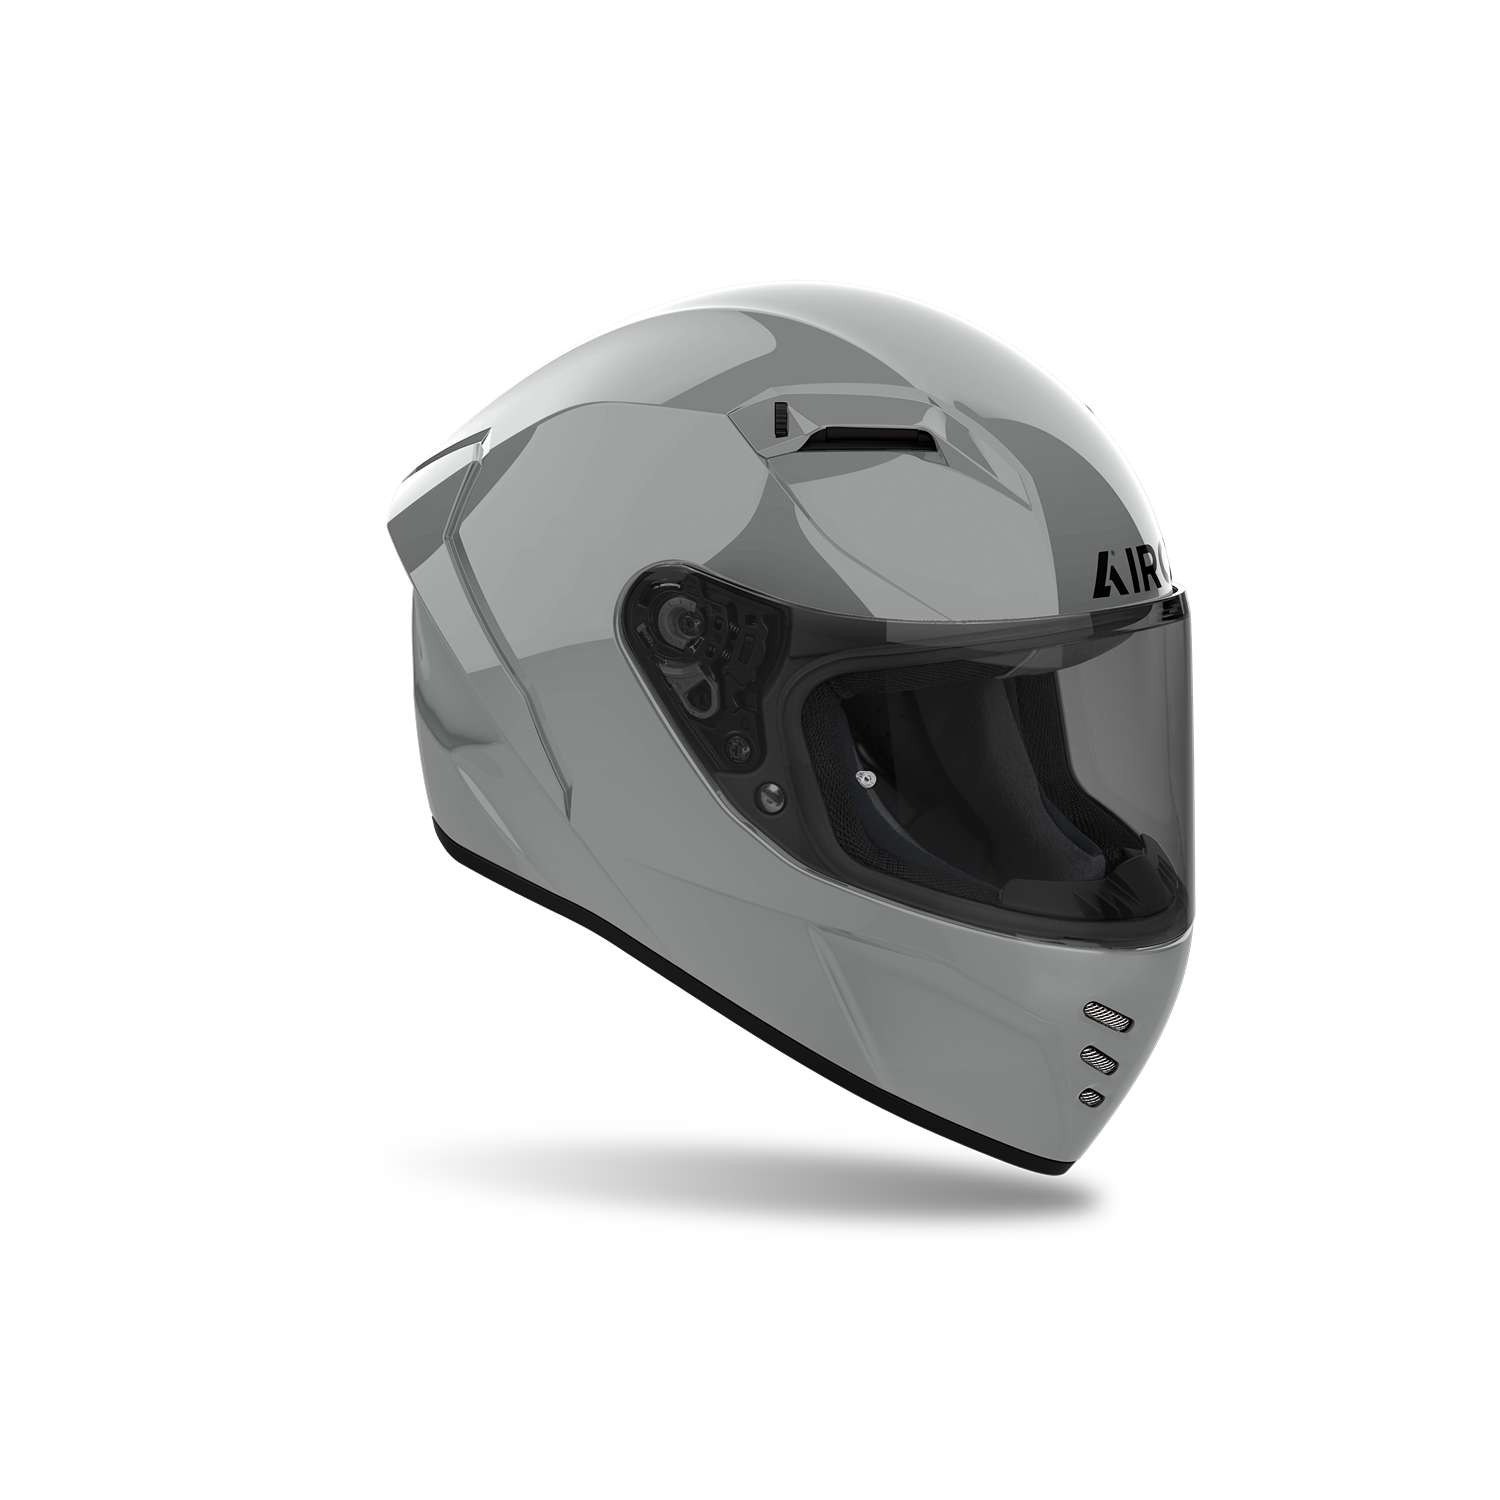 Image of Airoh Helmet Connor Light Gray Full Face Helmet Size XL ID 8029243355243